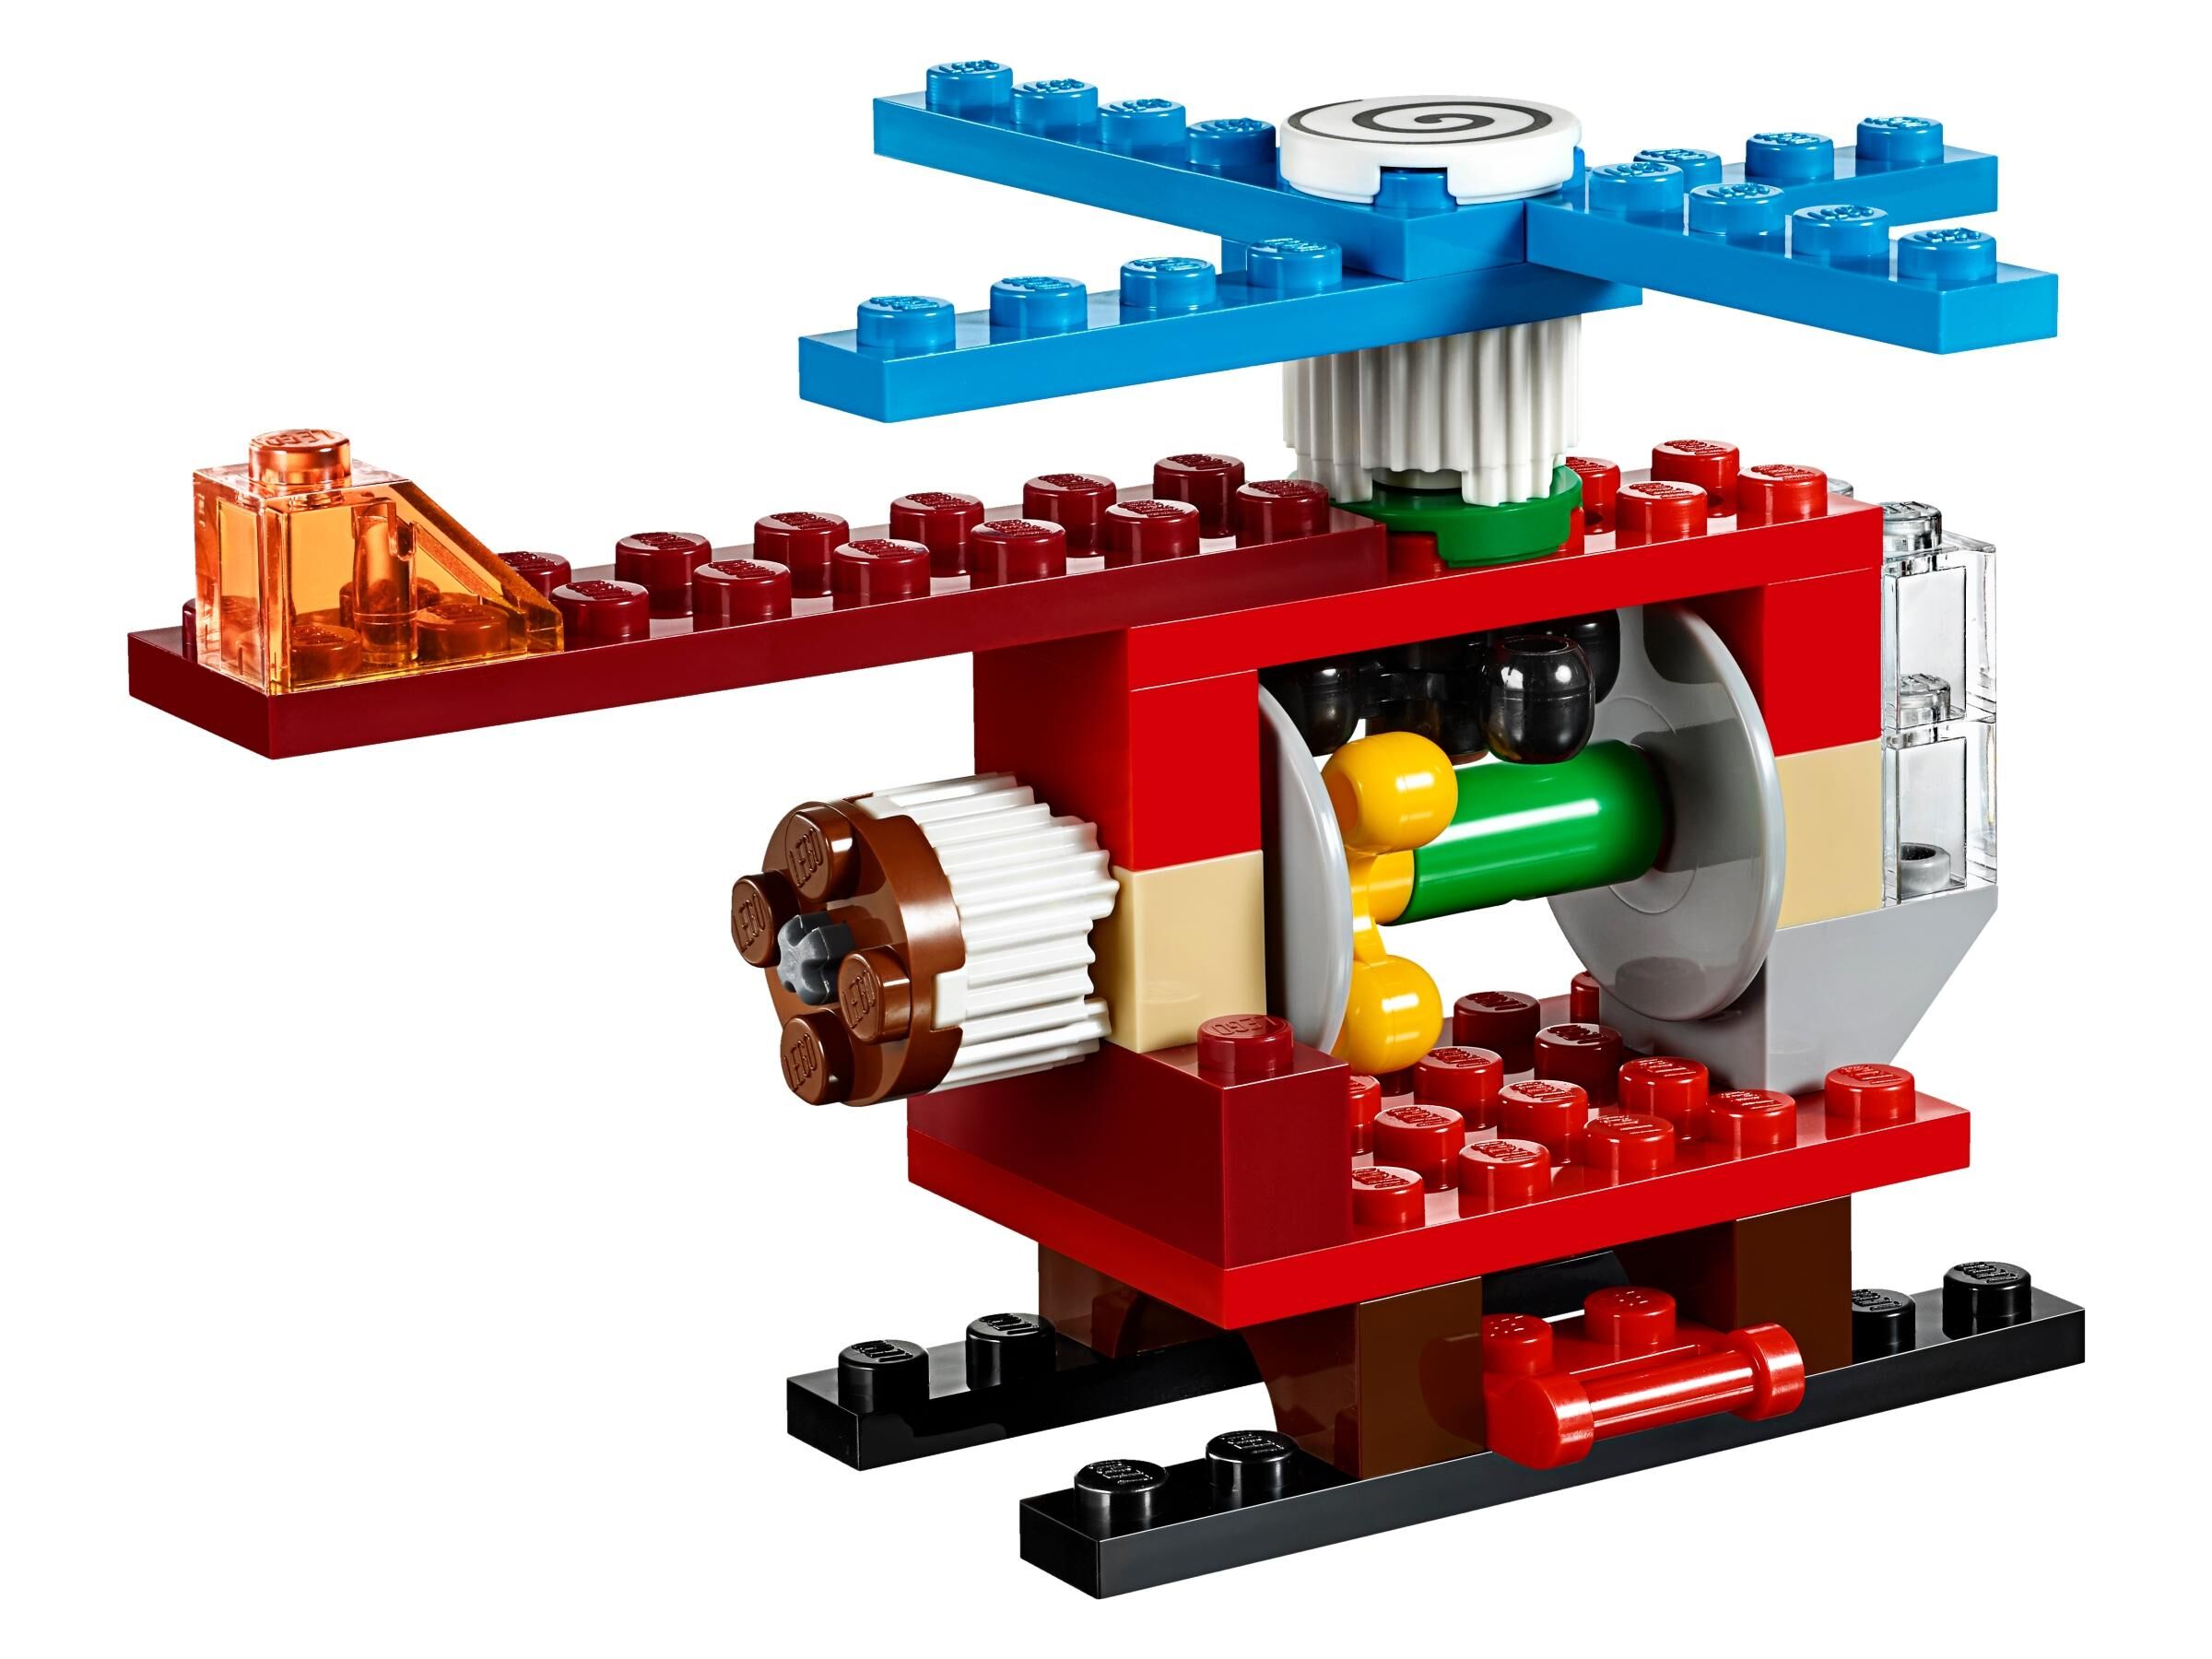 Zahnräder NEU OVP NEW MISB NRFB LEGO® Classic 10712 LEGO® Bausteine-Set 